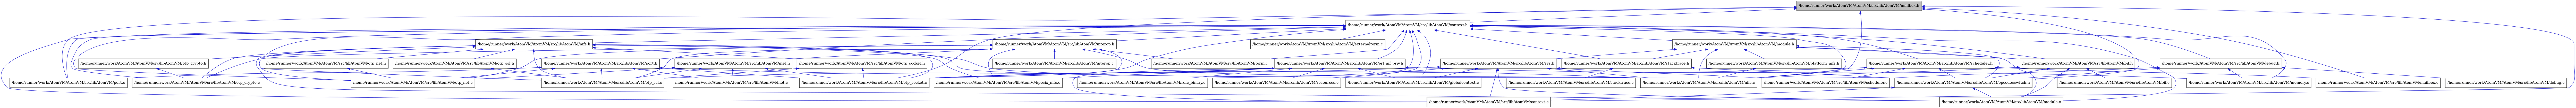 digraph {
    graph [bgcolor="#00000000"]
    node [shape=rectangle style=filled fillcolor="#FFFFFF" font=Helvetica padding=2]
    edge [color="#1414CE"]
    "5" [label="/home/runner/work/AtomVM/AtomVM/src/libAtomVM/bif.c" tooltip="/home/runner/work/AtomVM/AtomVM/src/libAtomVM/bif.c"]
    "4" [label="/home/runner/work/AtomVM/AtomVM/src/libAtomVM/bif.h" tooltip="/home/runner/work/AtomVM/AtomVM/src/libAtomVM/bif.h"]
    "29" [label="/home/runner/work/AtomVM/AtomVM/src/libAtomVM/platform_nifs.h" tooltip="/home/runner/work/AtomVM/AtomVM/src/libAtomVM/platform_nifs.h"]
    "17" [label="/home/runner/work/AtomVM/AtomVM/src/libAtomVM/posix_nifs.c" tooltip="/home/runner/work/AtomVM/AtomVM/src/libAtomVM/posix_nifs.c"]
    "23" [label="/home/runner/work/AtomVM/AtomVM/src/libAtomVM/inet.c" tooltip="/home/runner/work/AtomVM/AtomVM/src/libAtomVM/inet.c"]
    "22" [label="/home/runner/work/AtomVM/AtomVM/src/libAtomVM/inet.h" tooltip="/home/runner/work/AtomVM/AtomVM/src/libAtomVM/inet.h"]
    "12" [label="/home/runner/work/AtomVM/AtomVM/src/libAtomVM/scheduler.c" tooltip="/home/runner/work/AtomVM/AtomVM/src/libAtomVM/scheduler.c"]
    "40" [label="/home/runner/work/AtomVM/AtomVM/src/libAtomVM/scheduler.h" tooltip="/home/runner/work/AtomVM/AtomVM/src/libAtomVM/scheduler.h"]
    "2" [label="/home/runner/work/AtomVM/AtomVM/src/libAtomVM/context.c" tooltip="/home/runner/work/AtomVM/AtomVM/src/libAtomVM/context.c"]
    "3" [label="/home/runner/work/AtomVM/AtomVM/src/libAtomVM/context.h" tooltip="/home/runner/work/AtomVM/AtomVM/src/libAtomVM/context.h"]
    "38" [label="/home/runner/work/AtomVM/AtomVM/src/libAtomVM/port.c" tooltip="/home/runner/work/AtomVM/AtomVM/src/libAtomVM/port.c"]
    "39" [label="/home/runner/work/AtomVM/AtomVM/src/libAtomVM/port.h" tooltip="/home/runner/work/AtomVM/AtomVM/src/libAtomVM/port.h"]
    "31" [label="/home/runner/work/AtomVM/AtomVM/src/libAtomVM/stacktrace.c" tooltip="/home/runner/work/AtomVM/AtomVM/src/libAtomVM/stacktrace.c"]
    "30" [label="/home/runner/work/AtomVM/AtomVM/src/libAtomVM/stacktrace.h" tooltip="/home/runner/work/AtomVM/AtomVM/src/libAtomVM/stacktrace.h"]
    "18" [label="/home/runner/work/AtomVM/AtomVM/src/libAtomVM/refc_binary.c" tooltip="/home/runner/work/AtomVM/AtomVM/src/libAtomVM/refc_binary.c"]
    "41" [label="/home/runner/work/AtomVM/AtomVM/src/libAtomVM/mailbox.c" tooltip="/home/runner/work/AtomVM/AtomVM/src/libAtomVM/mailbox.c"]
    "1" [label="/home/runner/work/AtomVM/AtomVM/src/libAtomVM/mailbox.h" tooltip="/home/runner/work/AtomVM/AtomVM/src/libAtomVM/mailbox.h" fillcolor="#BFBFBF"]
    "6" [label="/home/runner/work/AtomVM/AtomVM/src/libAtomVM/module.c" tooltip="/home/runner/work/AtomVM/AtomVM/src/libAtomVM/module.c"]
    "28" [label="/home/runner/work/AtomVM/AtomVM/src/libAtomVM/module.h" tooltip="/home/runner/work/AtomVM/AtomVM/src/libAtomVM/module.h"]
    "27" [label="/home/runner/work/AtomVM/AtomVM/src/libAtomVM/term.c" tooltip="/home/runner/work/AtomVM/AtomVM/src/libAtomVM/term.c"]
    "25" [label="/home/runner/work/AtomVM/AtomVM/src/libAtomVM/interop.c" tooltip="/home/runner/work/AtomVM/AtomVM/src/libAtomVM/interop.c"]
    "16" [label="/home/runner/work/AtomVM/AtomVM/src/libAtomVM/otp_ssl.c" tooltip="/home/runner/work/AtomVM/AtomVM/src/libAtomVM/otp_ssl.c"]
    "21" [label="/home/runner/work/AtomVM/AtomVM/src/libAtomVM/interop.h" tooltip="/home/runner/work/AtomVM/AtomVM/src/libAtomVM/interop.h"]
    "37" [label="/home/runner/work/AtomVM/AtomVM/src/libAtomVM/otp_ssl.h" tooltip="/home/runner/work/AtomVM/AtomVM/src/libAtomVM/otp_ssl.h"]
    "19" [label="/home/runner/work/AtomVM/AtomVM/src/libAtomVM/resources.c" tooltip="/home/runner/work/AtomVM/AtomVM/src/libAtomVM/resources.c"]
    "26" [label="/home/runner/work/AtomVM/AtomVM/src/libAtomVM/otp_crypto.c" tooltip="/home/runner/work/AtomVM/AtomVM/src/libAtomVM/otp_crypto.c"]
    "34" [label="/home/runner/work/AtomVM/AtomVM/src/libAtomVM/otp_crypto.h" tooltip="/home/runner/work/AtomVM/AtomVM/src/libAtomVM/otp_crypto.h"]
    "24" [label="/home/runner/work/AtomVM/AtomVM/src/libAtomVM/otp_net.c" tooltip="/home/runner/work/AtomVM/AtomVM/src/libAtomVM/otp_net.c"]
    "35" [label="/home/runner/work/AtomVM/AtomVM/src/libAtomVM/otp_net.h" tooltip="/home/runner/work/AtomVM/AtomVM/src/libAtomVM/otp_net.h"]
    "13" [label="/home/runner/work/AtomVM/AtomVM/src/libAtomVM/erl_nif_priv.h" tooltip="/home/runner/work/AtomVM/AtomVM/src/libAtomVM/erl_nif_priv.h"]
    "32" [label="/home/runner/work/AtomVM/AtomVM/src/libAtomVM/sys.h" tooltip="/home/runner/work/AtomVM/AtomVM/src/libAtomVM/sys.h"]
    "7" [label="/home/runner/work/AtomVM/AtomVM/src/libAtomVM/nifs.c" tooltip="/home/runner/work/AtomVM/AtomVM/src/libAtomVM/nifs.c"]
    "33" [label="/home/runner/work/AtomVM/AtomVM/src/libAtomVM/nifs.h" tooltip="/home/runner/work/AtomVM/AtomVM/src/libAtomVM/nifs.h"]
    "8" [label="/home/runner/work/AtomVM/AtomVM/src/libAtomVM/opcodesswitch.h" tooltip="/home/runner/work/AtomVM/AtomVM/src/libAtomVM/opcodesswitch.h"]
    "10" [label="/home/runner/work/AtomVM/AtomVM/src/libAtomVM/debug.c" tooltip="/home/runner/work/AtomVM/AtomVM/src/libAtomVM/debug.c"]
    "9" [label="/home/runner/work/AtomVM/AtomVM/src/libAtomVM/debug.h" tooltip="/home/runner/work/AtomVM/AtomVM/src/libAtomVM/debug.h"]
    "14" [label="/home/runner/work/AtomVM/AtomVM/src/libAtomVM/globalcontext.c" tooltip="/home/runner/work/AtomVM/AtomVM/src/libAtomVM/globalcontext.c"]
    "11" [label="/home/runner/work/AtomVM/AtomVM/src/libAtomVM/memory.c" tooltip="/home/runner/work/AtomVM/AtomVM/src/libAtomVM/memory.c"]
    "15" [label="/home/runner/work/AtomVM/AtomVM/src/libAtomVM/otp_socket.c" tooltip="/home/runner/work/AtomVM/AtomVM/src/libAtomVM/otp_socket.c"]
    "36" [label="/home/runner/work/AtomVM/AtomVM/src/libAtomVM/otp_socket.h" tooltip="/home/runner/work/AtomVM/AtomVM/src/libAtomVM/otp_socket.h"]
    "20" [label="/home/runner/work/AtomVM/AtomVM/src/libAtomVM/externalterm.c" tooltip="/home/runner/work/AtomVM/AtomVM/src/libAtomVM/externalterm.c"]
    "4" -> "5" [dir=back tooltip="include"]
    "4" -> "6" [dir=back tooltip="include"]
    "4" -> "7" [dir=back tooltip="include"]
    "4" -> "8" [dir=back tooltip="include"]
    "29" -> "7" [dir=back tooltip="include"]
    "22" -> "23" [dir=back tooltip="include"]
    "22" -> "24" [dir=back tooltip="include"]
    "22" -> "15" [dir=back tooltip="include"]
    "22" -> "16" [dir=back tooltip="include"]
    "40" -> "41" [dir=back tooltip="include"]
    "40" -> "7" [dir=back tooltip="include"]
    "40" -> "8" [dir=back tooltip="include"]
    "40" -> "15" [dir=back tooltip="include"]
    "40" -> "12" [dir=back tooltip="include"]
    "3" -> "4" [dir=back tooltip="include"]
    "3" -> "2" [dir=back tooltip="include"]
    "3" -> "9" [dir=back tooltip="include"]
    "3" -> "13" [dir=back tooltip="include"]
    "3" -> "20" [dir=back tooltip="include"]
    "3" -> "14" [dir=back tooltip="include"]
    "3" -> "21" [dir=back tooltip="include"]
    "3" -> "11" [dir=back tooltip="include"]
    "3" -> "6" [dir=back tooltip="include"]
    "3" -> "28" [dir=back tooltip="include"]
    "3" -> "7" [dir=back tooltip="include"]
    "3" -> "33" [dir=back tooltip="include"]
    "3" -> "26" [dir=back tooltip="include"]
    "3" -> "24" [dir=back tooltip="include"]
    "3" -> "15" [dir=back tooltip="include"]
    "3" -> "16" [dir=back tooltip="include"]
    "3" -> "38" [dir=back tooltip="include"]
    "3" -> "39" [dir=back tooltip="include"]
    "3" -> "18" [dir=back tooltip="include"]
    "3" -> "19" [dir=back tooltip="include"]
    "3" -> "40" [dir=back tooltip="include"]
    "3" -> "30" [dir=back tooltip="include"]
    "3" -> "27" [dir=back tooltip="include"]
    "39" -> "23" [dir=back tooltip="include"]
    "39" -> "7" [dir=back tooltip="include"]
    "39" -> "24" [dir=back tooltip="include"]
    "39" -> "15" [dir=back tooltip="include"]
    "39" -> "16" [dir=back tooltip="include"]
    "39" -> "38" [dir=back tooltip="include"]
    "30" -> "8" [dir=back tooltip="include"]
    "30" -> "31" [dir=back tooltip="include"]
    "1" -> "2" [dir=back tooltip="include"]
    "1" -> "3" [dir=back tooltip="include"]
    "1" -> "41" [dir=back tooltip="include"]
    "1" -> "7" [dir=back tooltip="include"]
    "1" -> "8" [dir=back tooltip="include"]
    "1" -> "15" [dir=back tooltip="include"]
    "1" -> "38" [dir=back tooltip="include"]
    "28" -> "4" [dir=back tooltip="include"]
    "28" -> "6" [dir=back tooltip="include"]
    "28" -> "7" [dir=back tooltip="include"]
    "28" -> "8" [dir=back tooltip="include"]
    "28" -> "29" [dir=back tooltip="include"]
    "28" -> "30" [dir=back tooltip="include"]
    "28" -> "32" [dir=back tooltip="include"]
    "21" -> "22" [dir=back tooltip="include"]
    "21" -> "25" [dir=back tooltip="include"]
    "21" -> "7" [dir=back tooltip="include"]
    "21" -> "26" [dir=back tooltip="include"]
    "21" -> "24" [dir=back tooltip="include"]
    "21" -> "15" [dir=back tooltip="include"]
    "21" -> "16" [dir=back tooltip="include"]
    "21" -> "17" [dir=back tooltip="include"]
    "21" -> "27" [dir=back tooltip="include"]
    "37" -> "16" [dir=back tooltip="include"]
    "34" -> "26" [dir=back tooltip="include"]
    "35" -> "24" [dir=back tooltip="include"]
    "13" -> "2" [dir=back tooltip="include"]
    "13" -> "14" [dir=back tooltip="include"]
    "13" -> "11" [dir=back tooltip="include"]
    "13" -> "15" [dir=back tooltip="include"]
    "13" -> "16" [dir=back tooltip="include"]
    "13" -> "17" [dir=back tooltip="include"]
    "13" -> "18" [dir=back tooltip="include"]
    "13" -> "19" [dir=back tooltip="include"]
    "32" -> "2" [dir=back tooltip="include"]
    "32" -> "14" [dir=back tooltip="include"]
    "32" -> "6" [dir=back tooltip="include"]
    "32" -> "7" [dir=back tooltip="include"]
    "32" -> "15" [dir=back tooltip="include"]
    "32" -> "19" [dir=back tooltip="include"]
    "32" -> "12" [dir=back tooltip="include"]
    "33" -> "6" [dir=back tooltip="include"]
    "33" -> "7" [dir=back tooltip="include"]
    "33" -> "8" [dir=back tooltip="include"]
    "33" -> "26" [dir=back tooltip="include"]
    "33" -> "34" [dir=back tooltip="include"]
    "33" -> "24" [dir=back tooltip="include"]
    "33" -> "35" [dir=back tooltip="include"]
    "33" -> "15" [dir=back tooltip="include"]
    "33" -> "36" [dir=back tooltip="include"]
    "33" -> "16" [dir=back tooltip="include"]
    "33" -> "37" [dir=back tooltip="include"]
    "33" -> "17" [dir=back tooltip="include"]
    "8" -> "2" [dir=back tooltip="include"]
    "8" -> "6" [dir=back tooltip="include"]
    "9" -> "10" [dir=back tooltip="include"]
    "9" -> "11" [dir=back tooltip="include"]
    "9" -> "8" [dir=back tooltip="include"]
    "9" -> "12" [dir=back tooltip="include"]
    "36" -> "15" [dir=back tooltip="include"]
    "36" -> "16" [dir=back tooltip="include"]
}